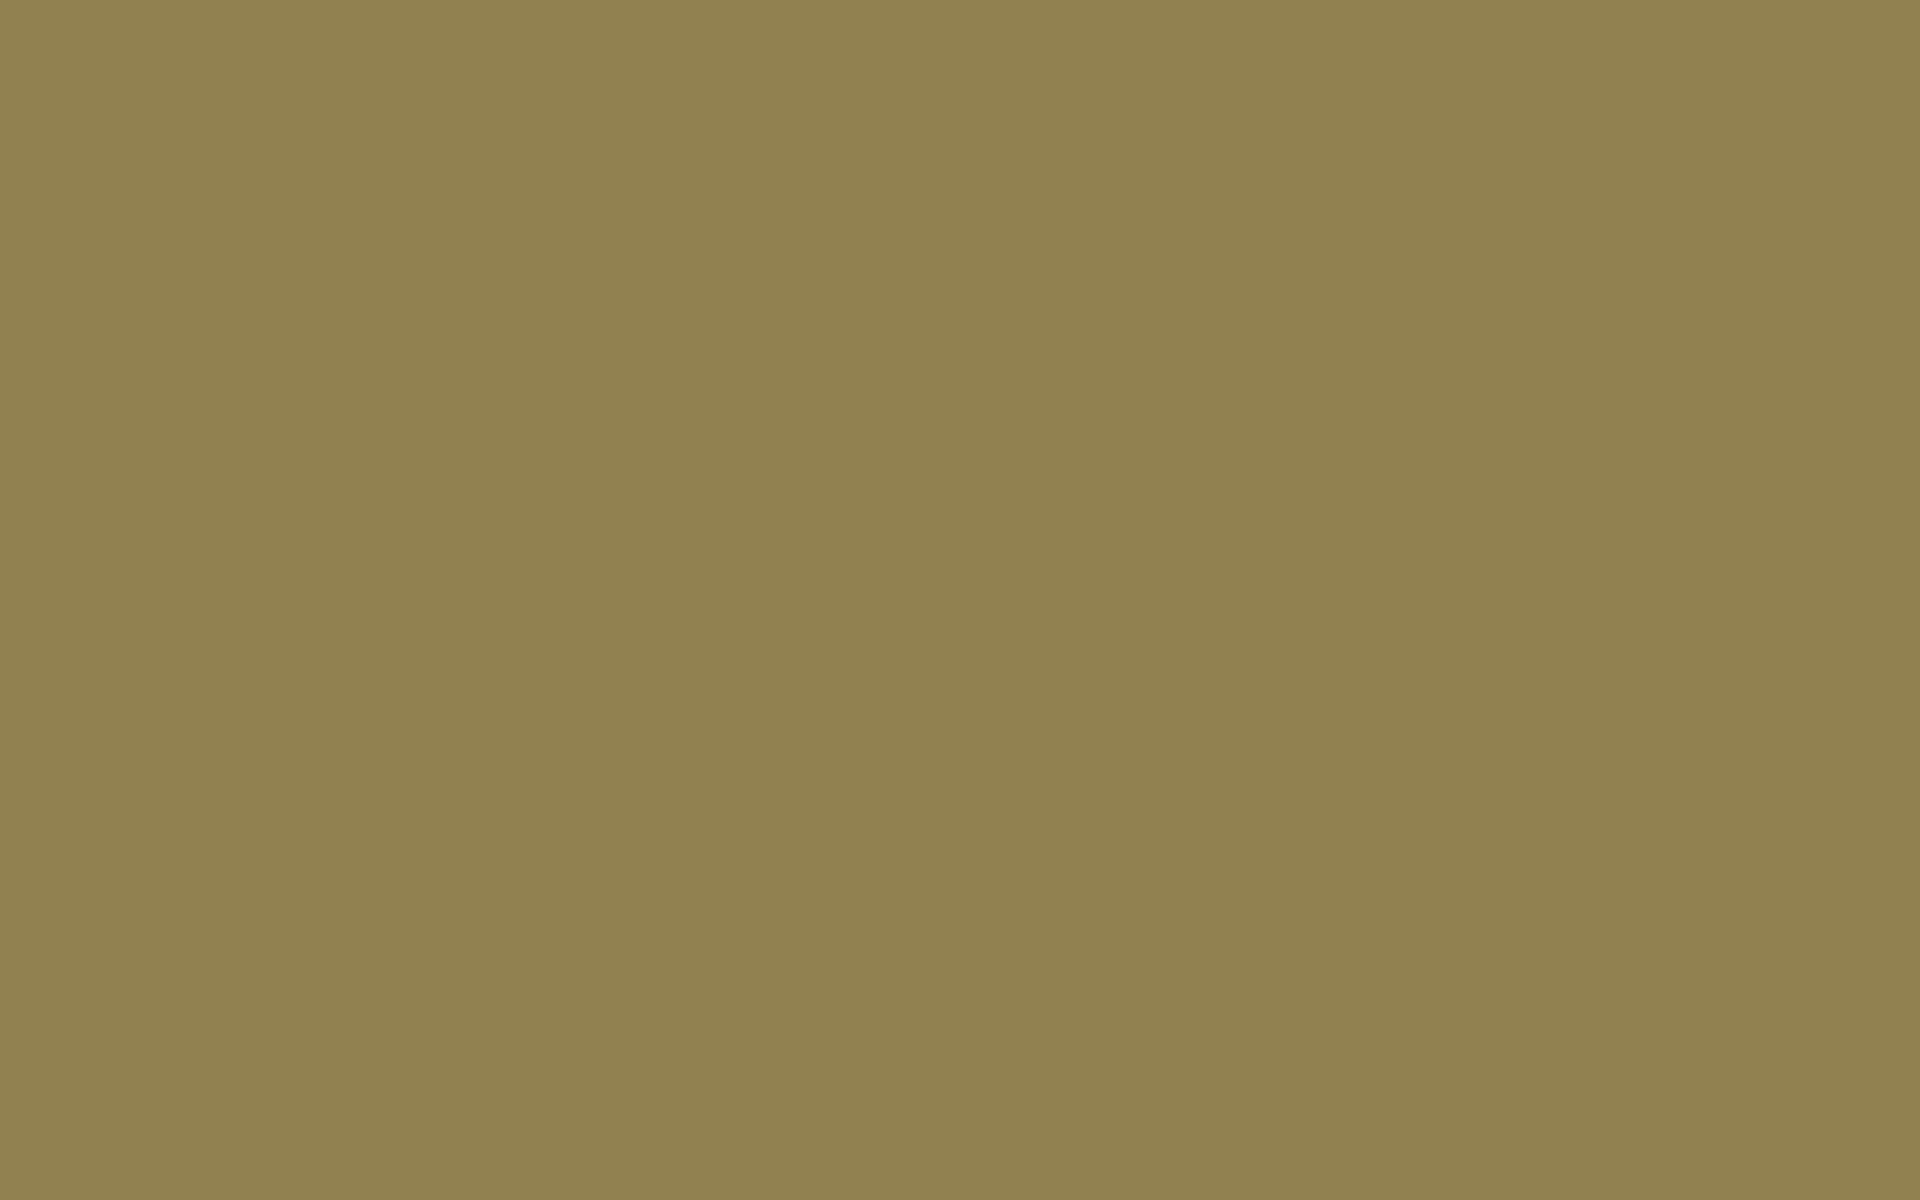 1920x1200 Dark Tan Solid Color Background